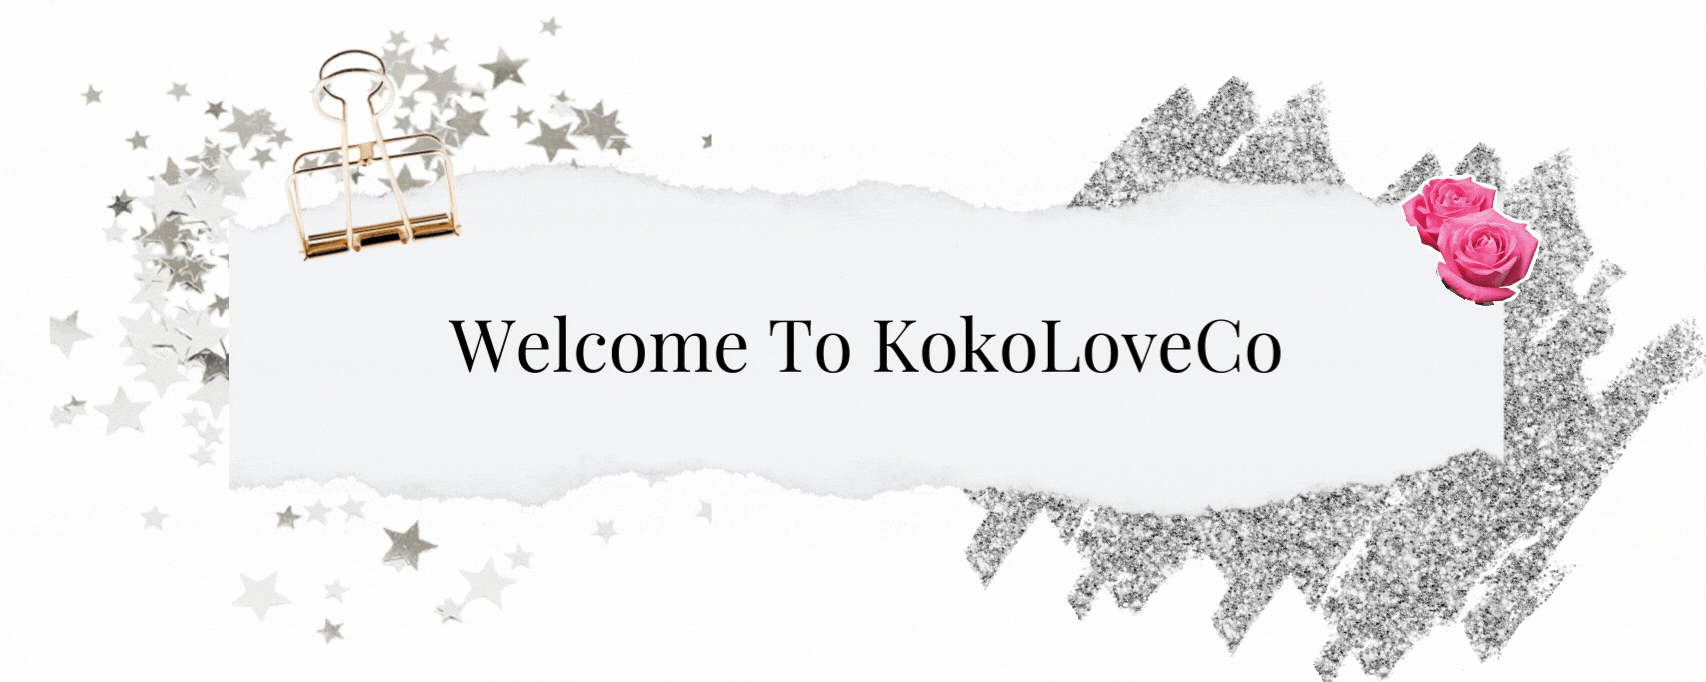 KokoLoveCo About Us Banner